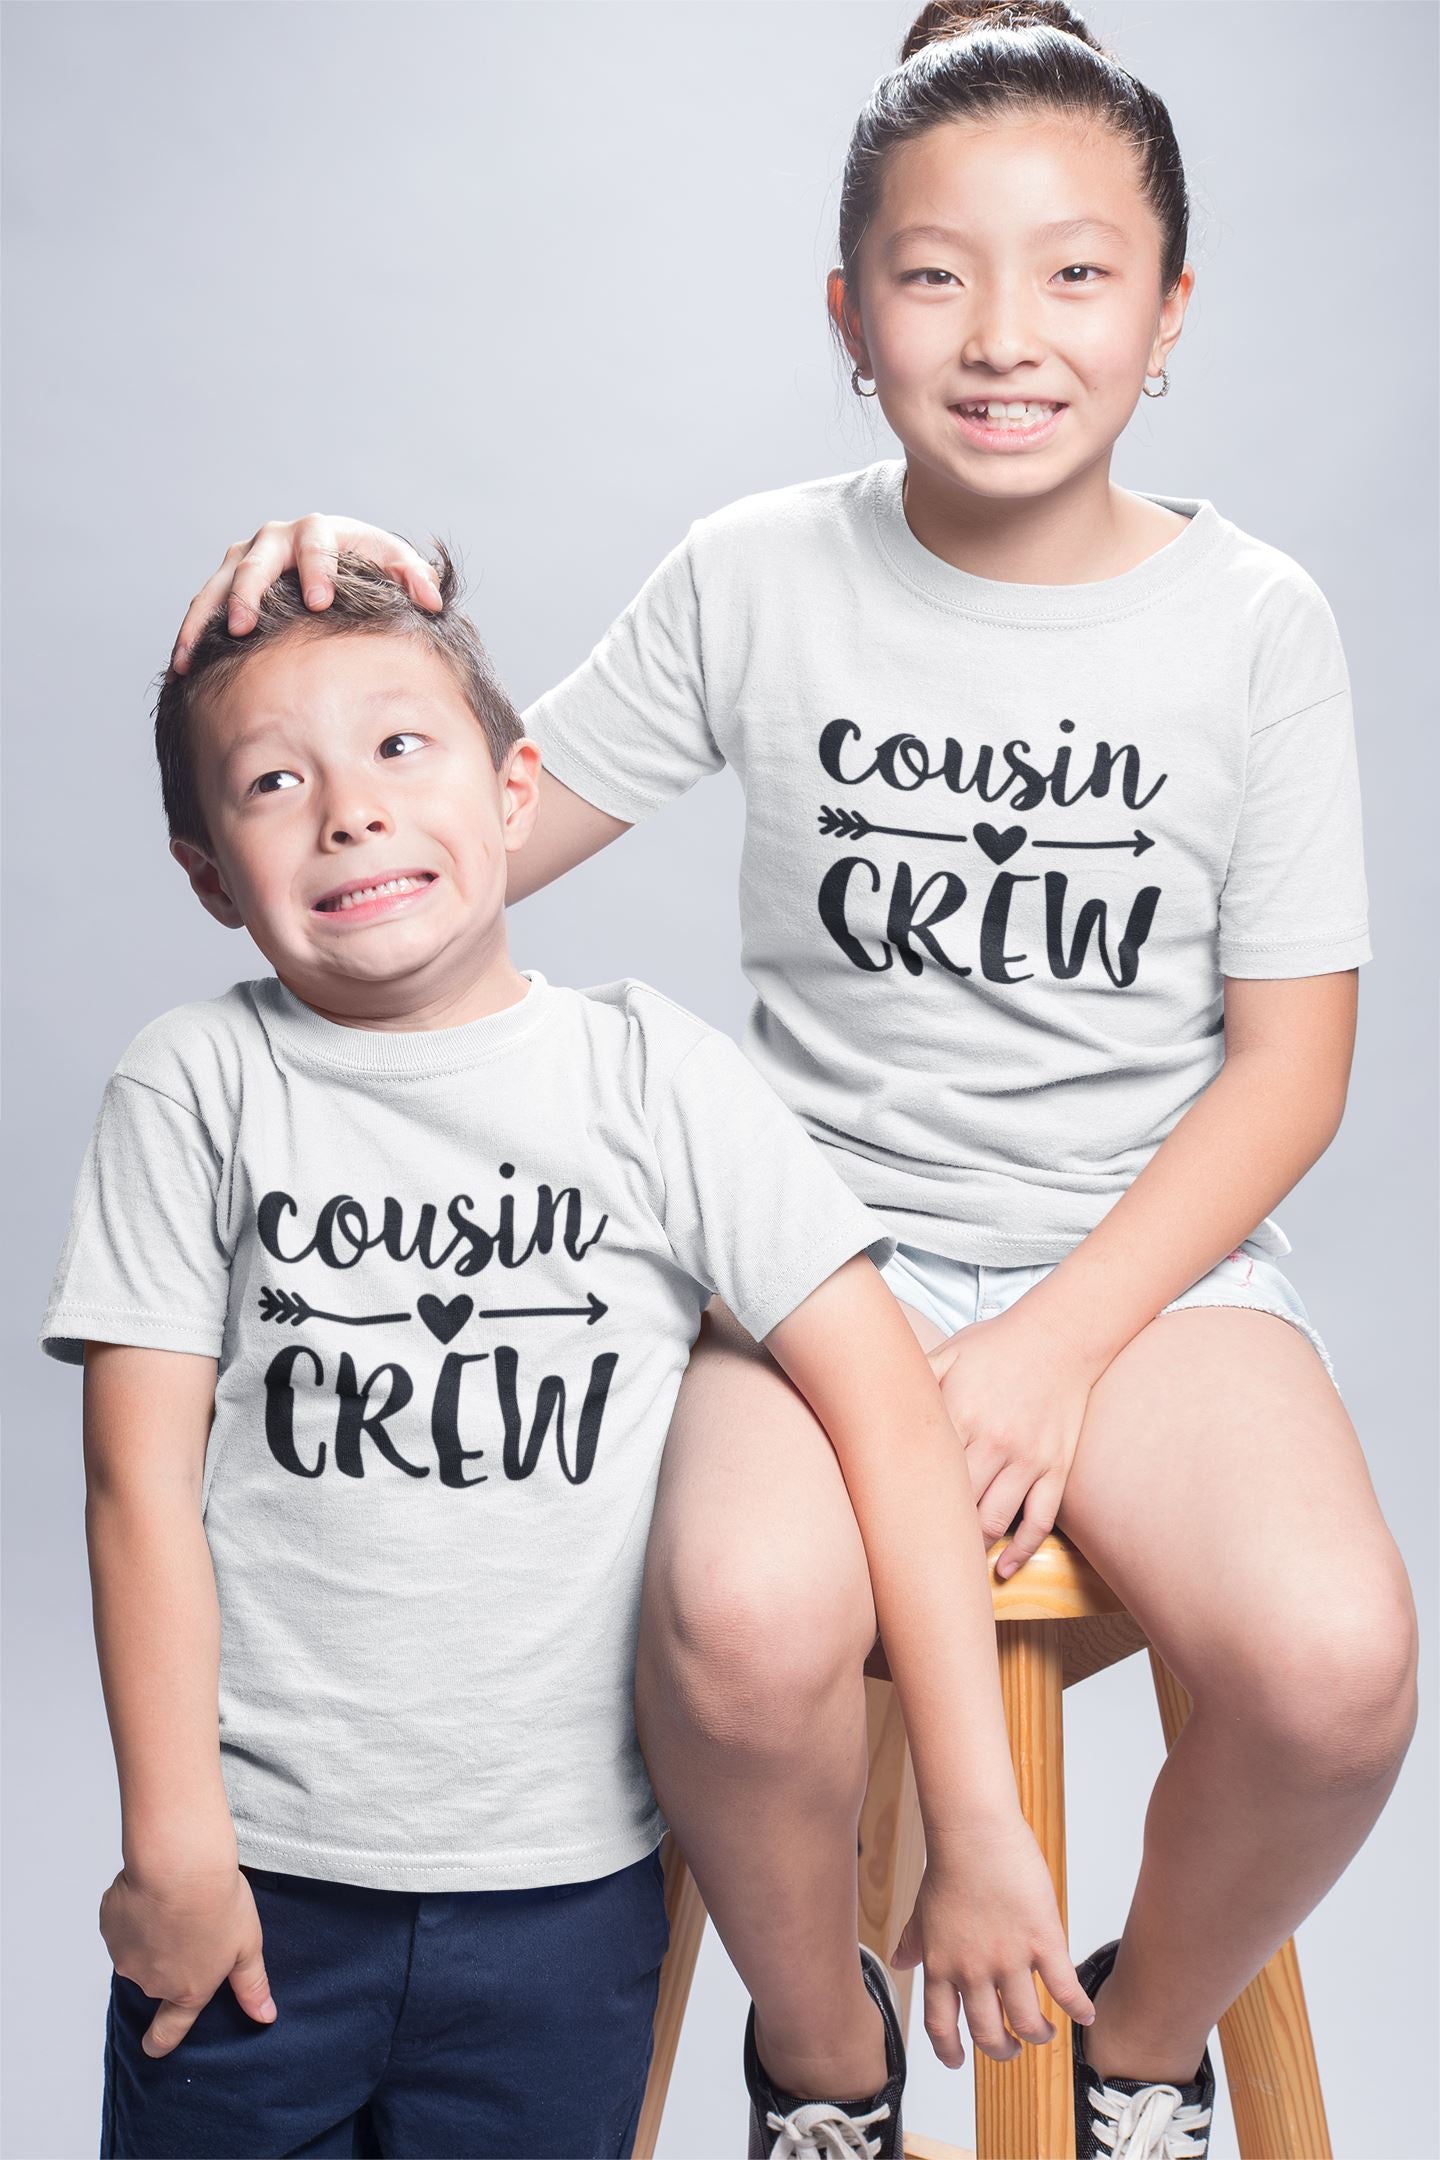 Cousin Crew T-shirts